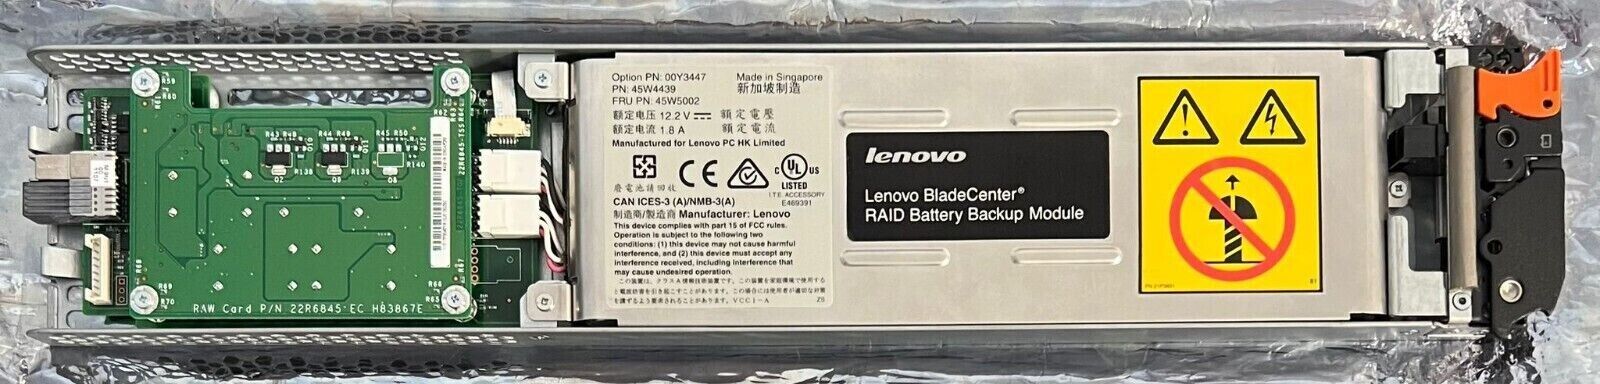 IBM/Lenovo 00Y3447 Blade Center S RAID Battery Module 45W5002 /45W4439